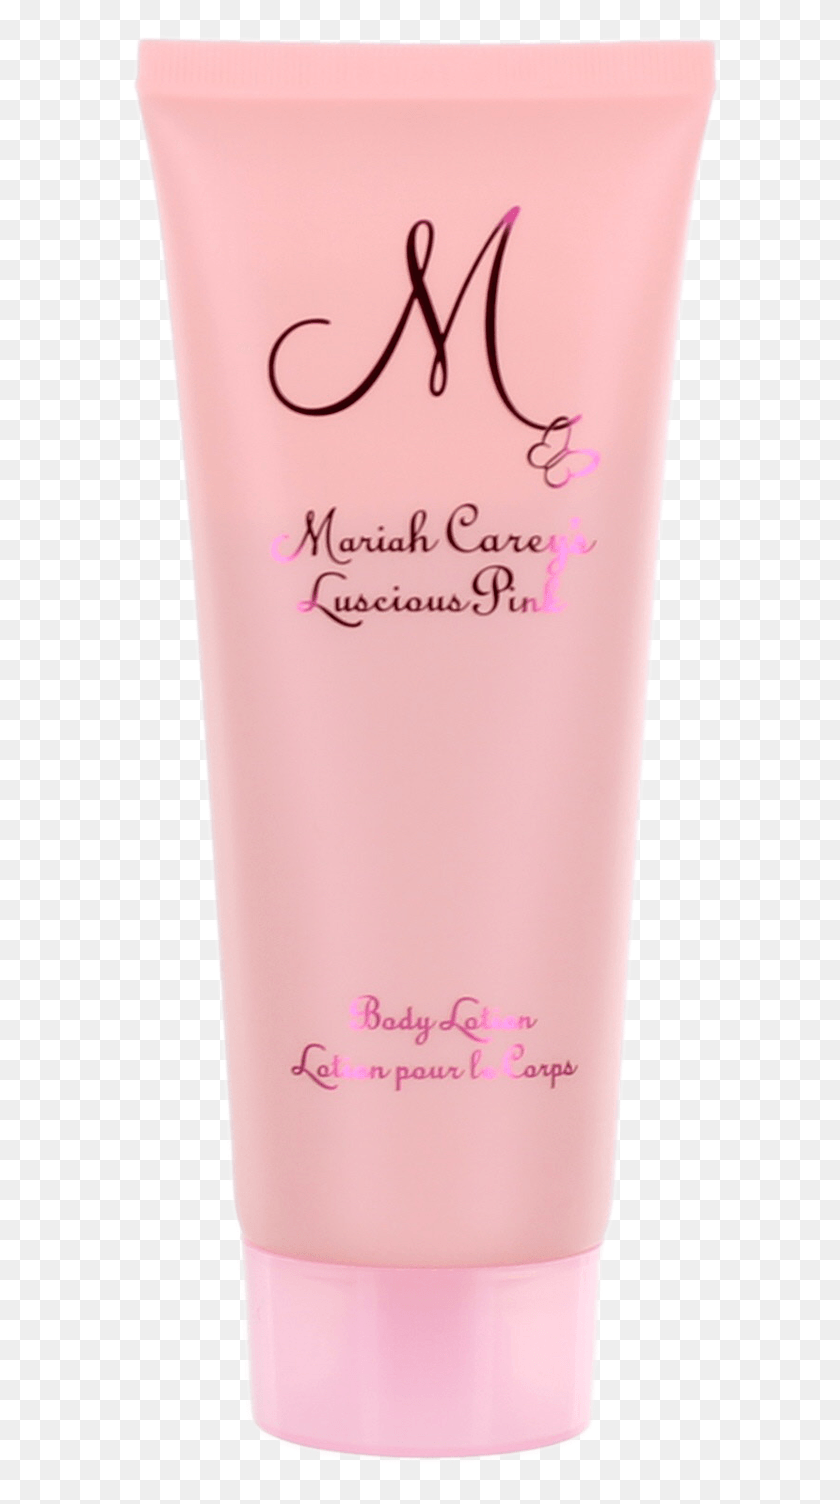 609x1444 Loción Corporal Lucious Pink By Mariah Carey Para Mujeres, Botella, Cosméticos, Púrpura Hd Png